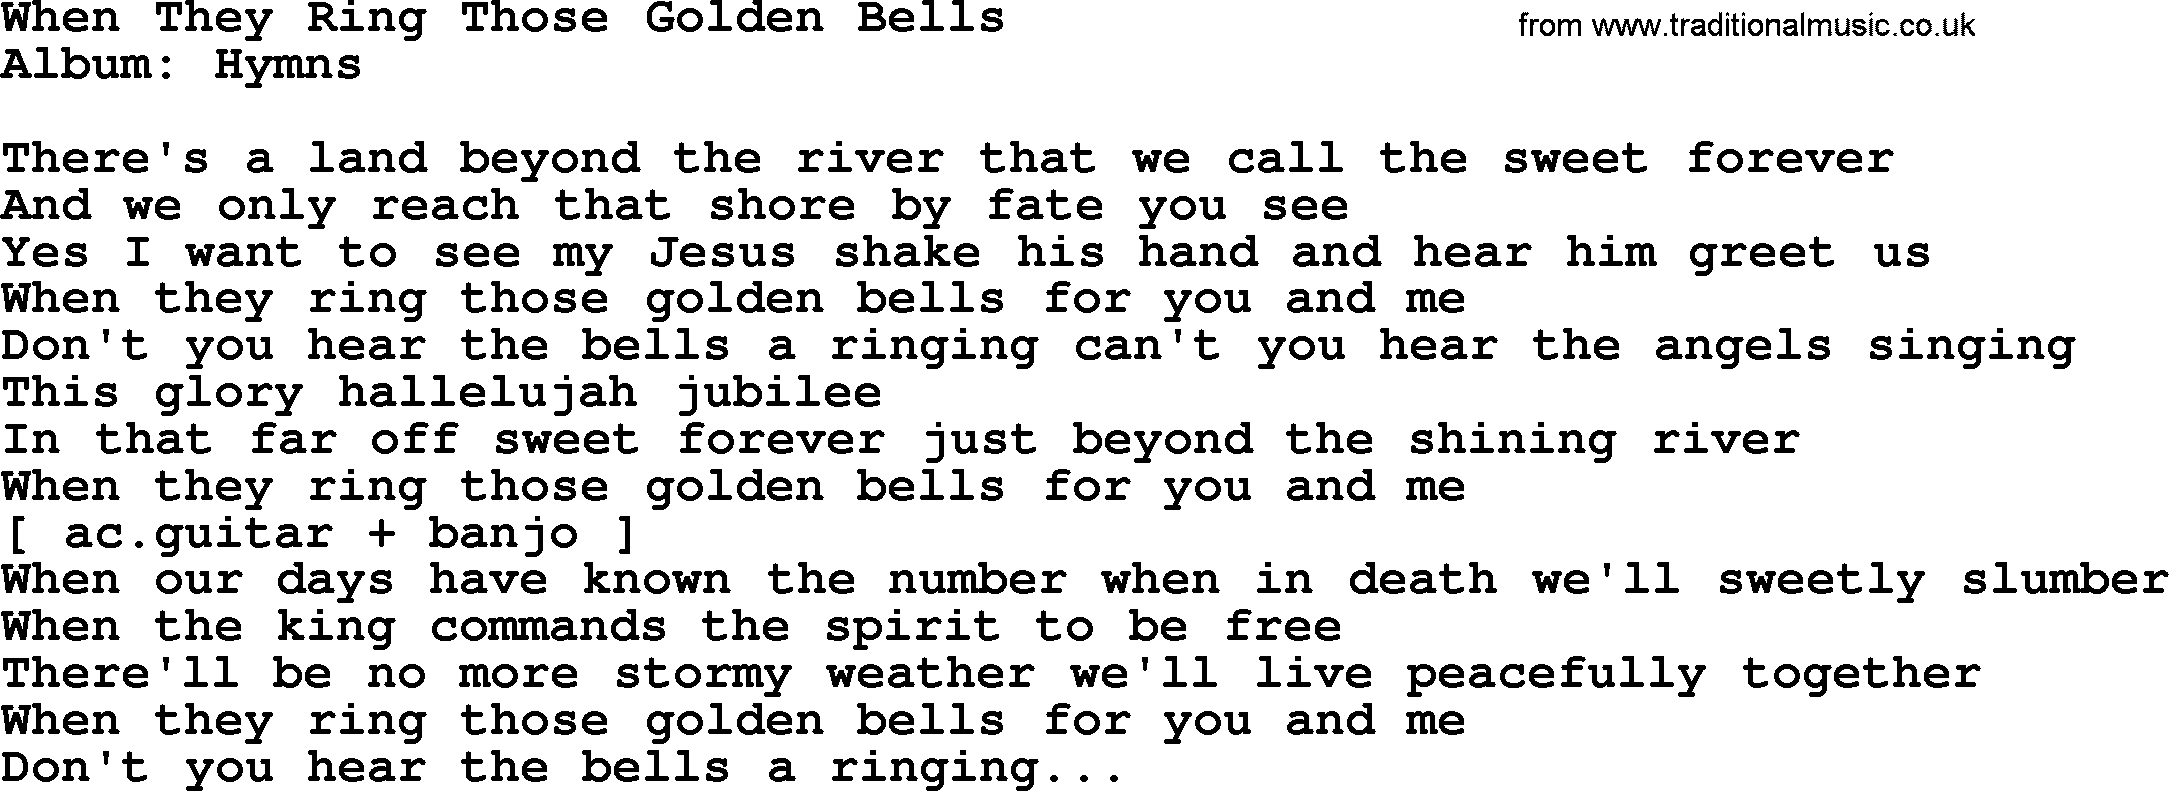 Loretta Lynn song: When They Ring Those Golden Bells lyrics